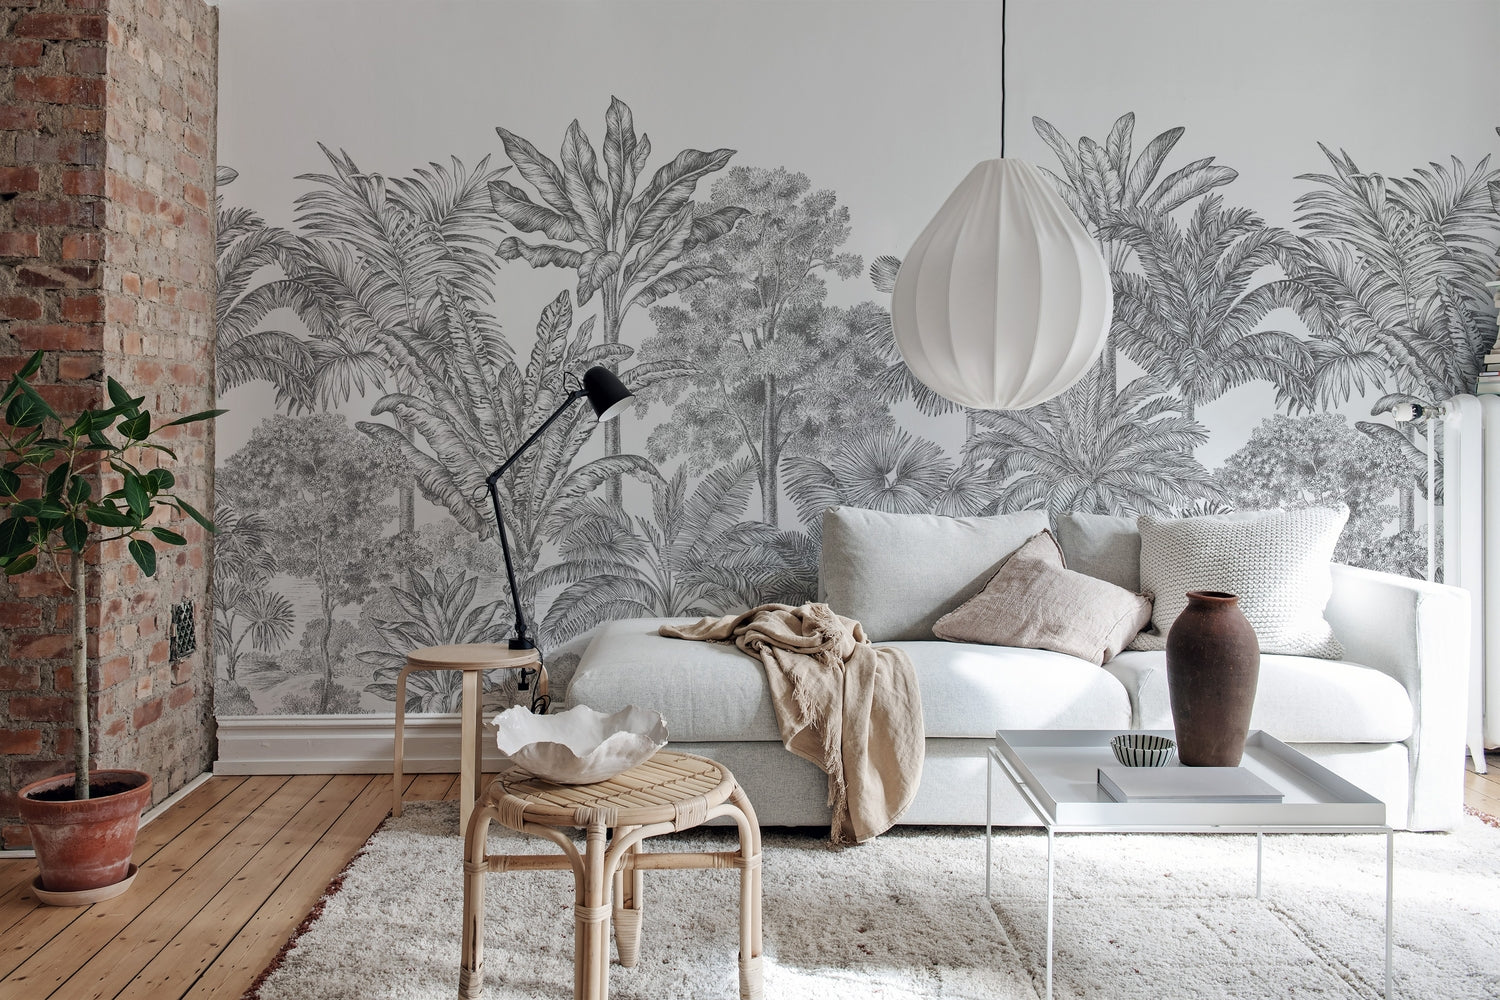 Tropical Bellewood, Mural Wallpaper in living room